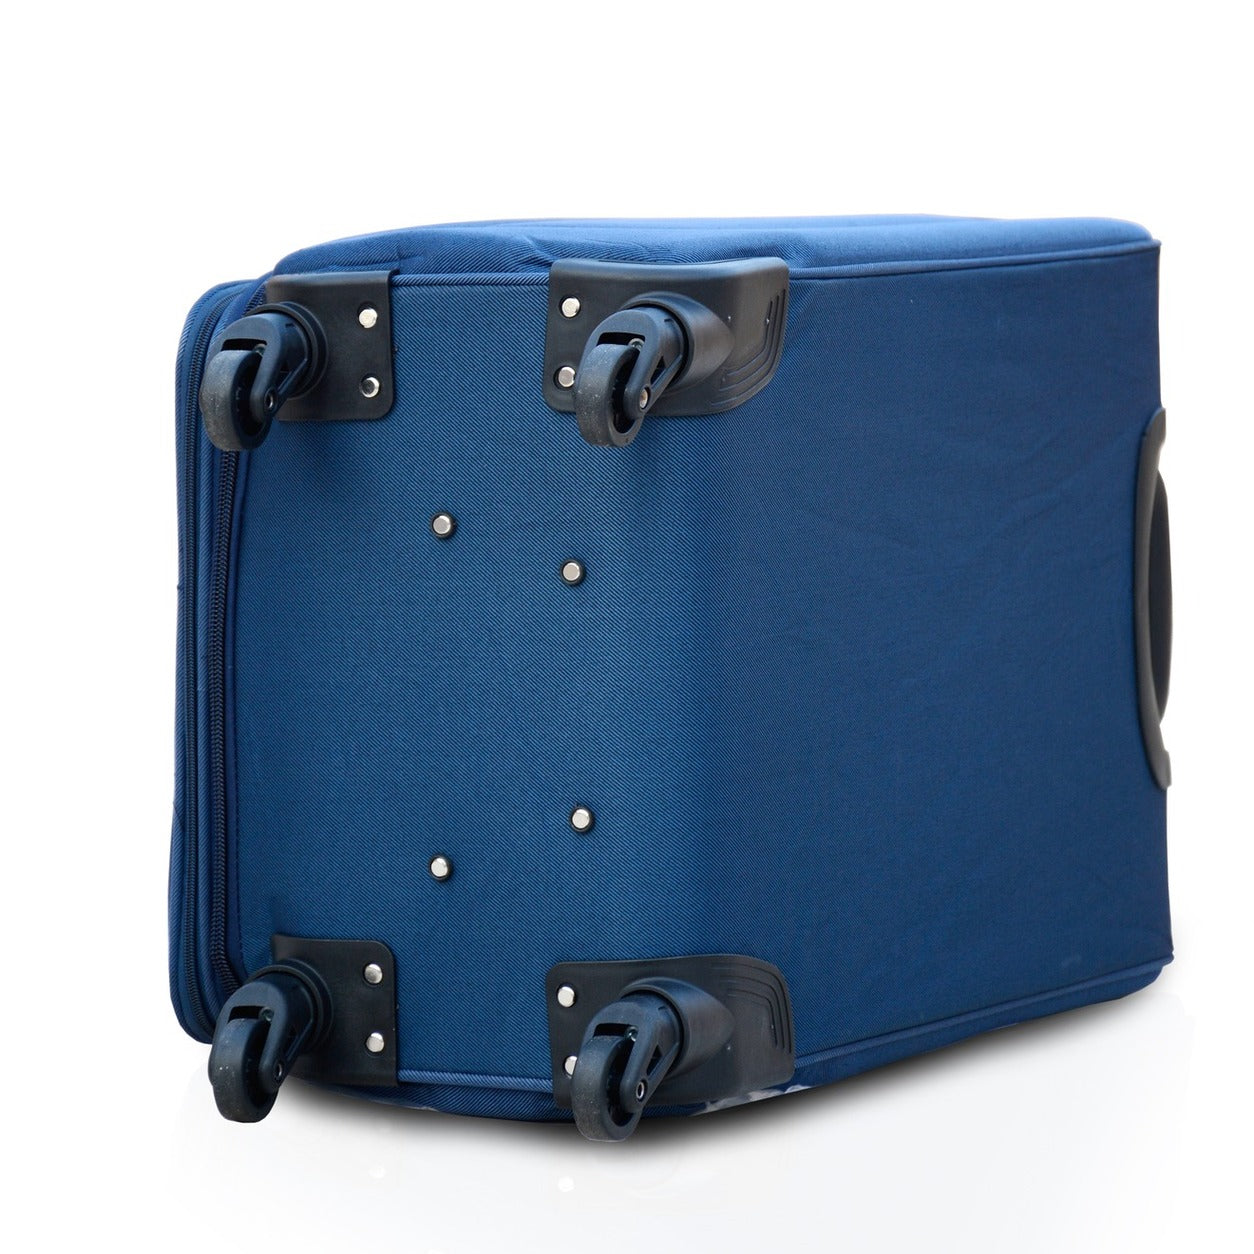 24" Blue Colour SJ JIAN 4 Wheel Luggage Lightweight Soft Material Trolley Bag